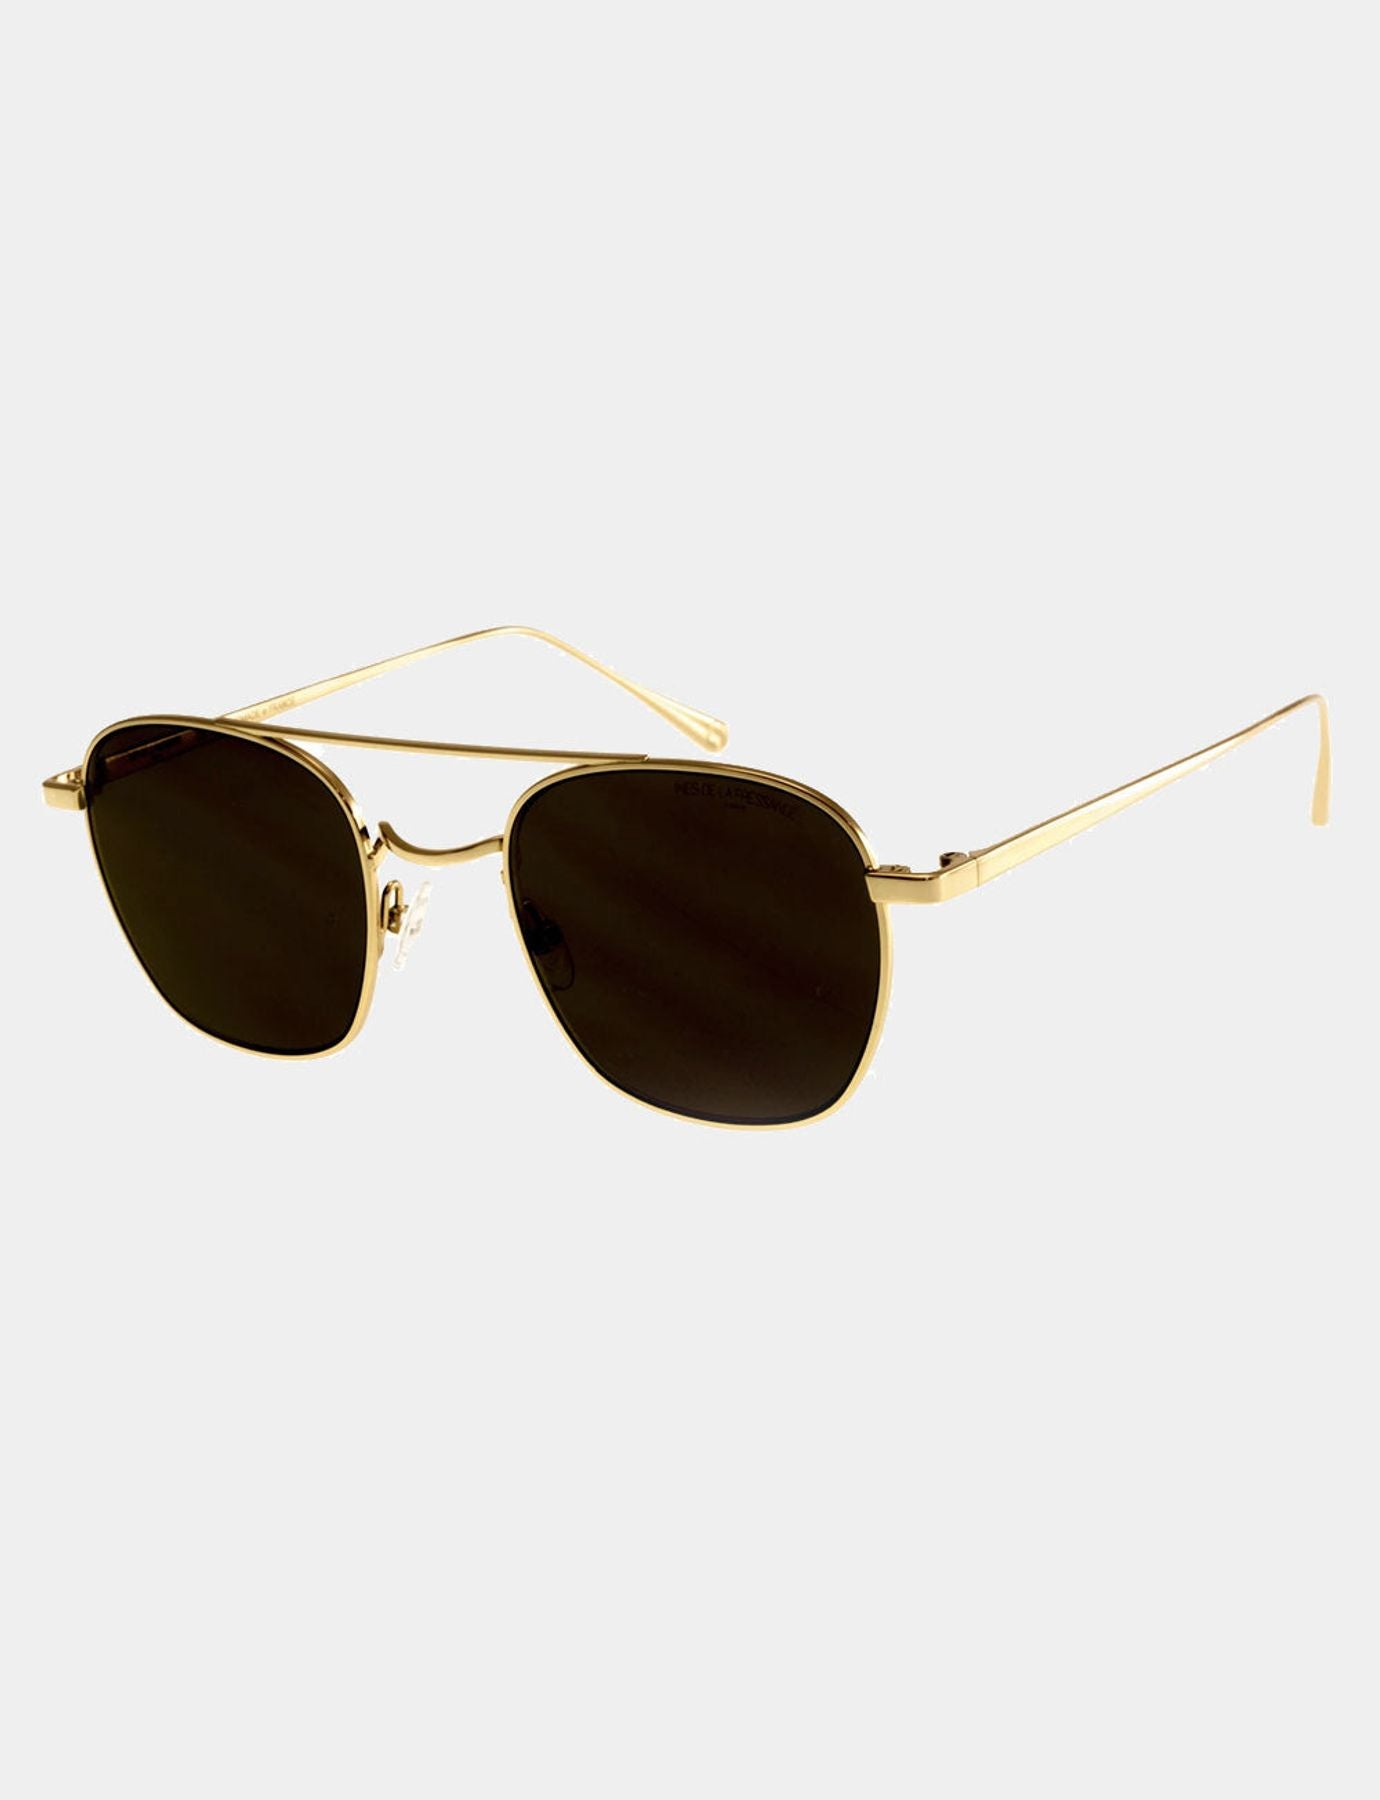 sunglasses-gold